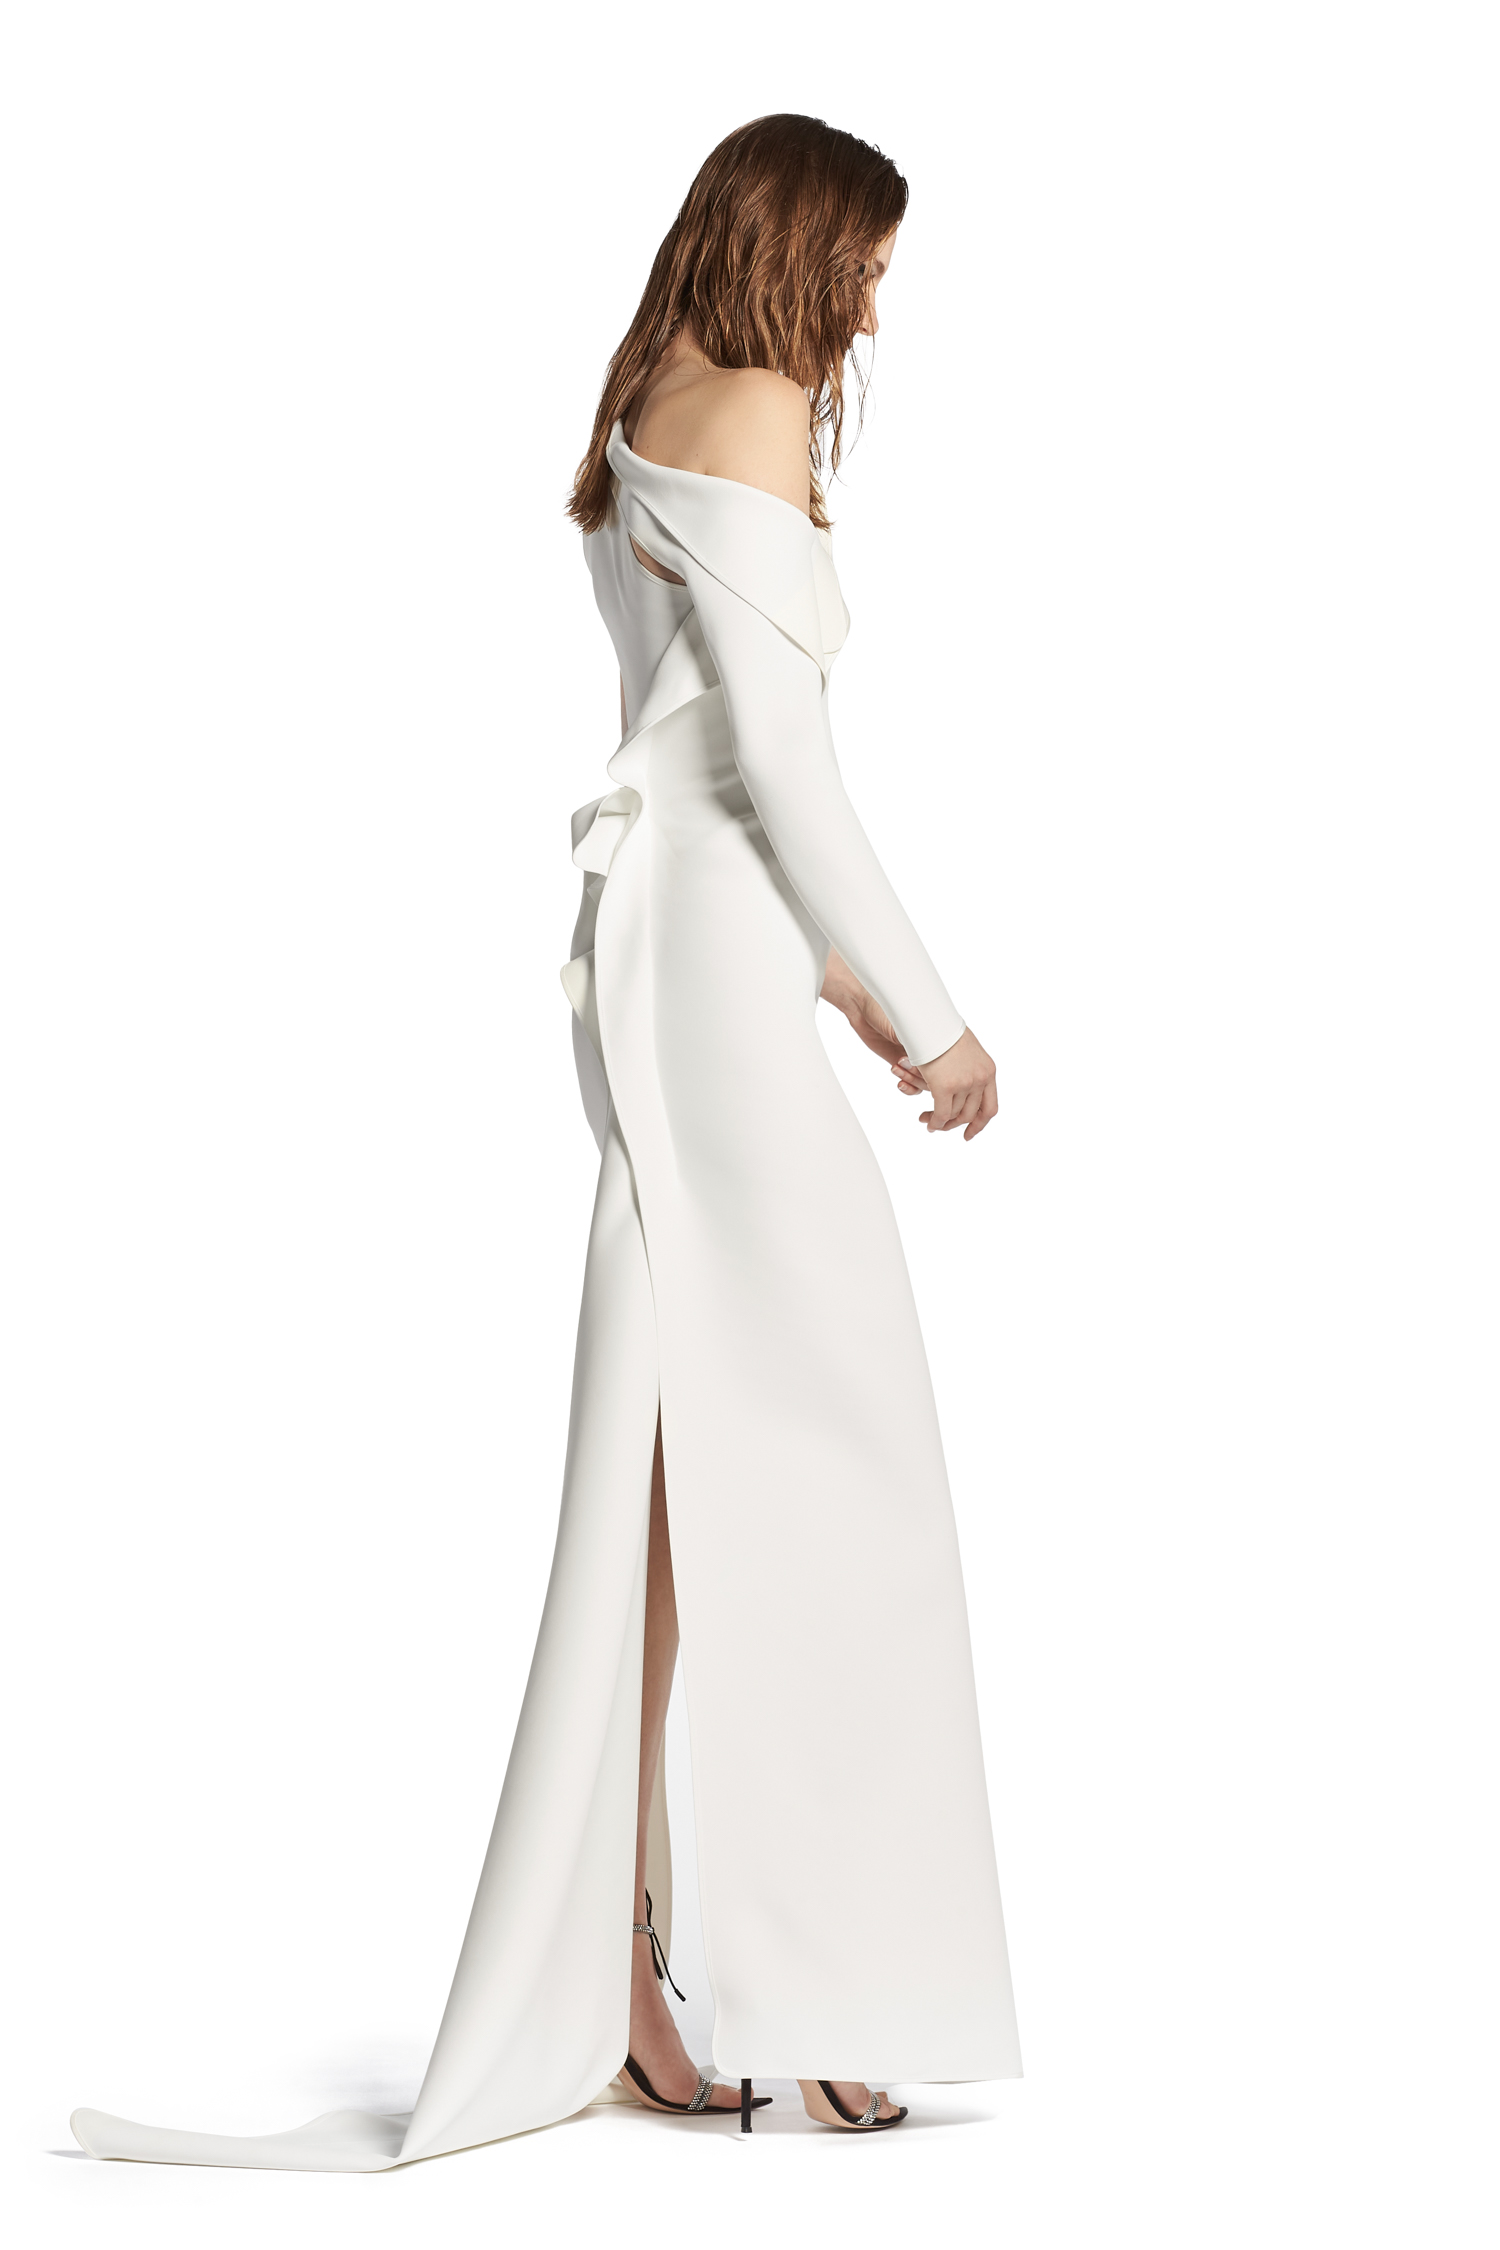 A Modern & Contemporary Toni Maticevski Gown | Love My Dress®, UK Wedding  Blog, Podcast, Directory & Shop